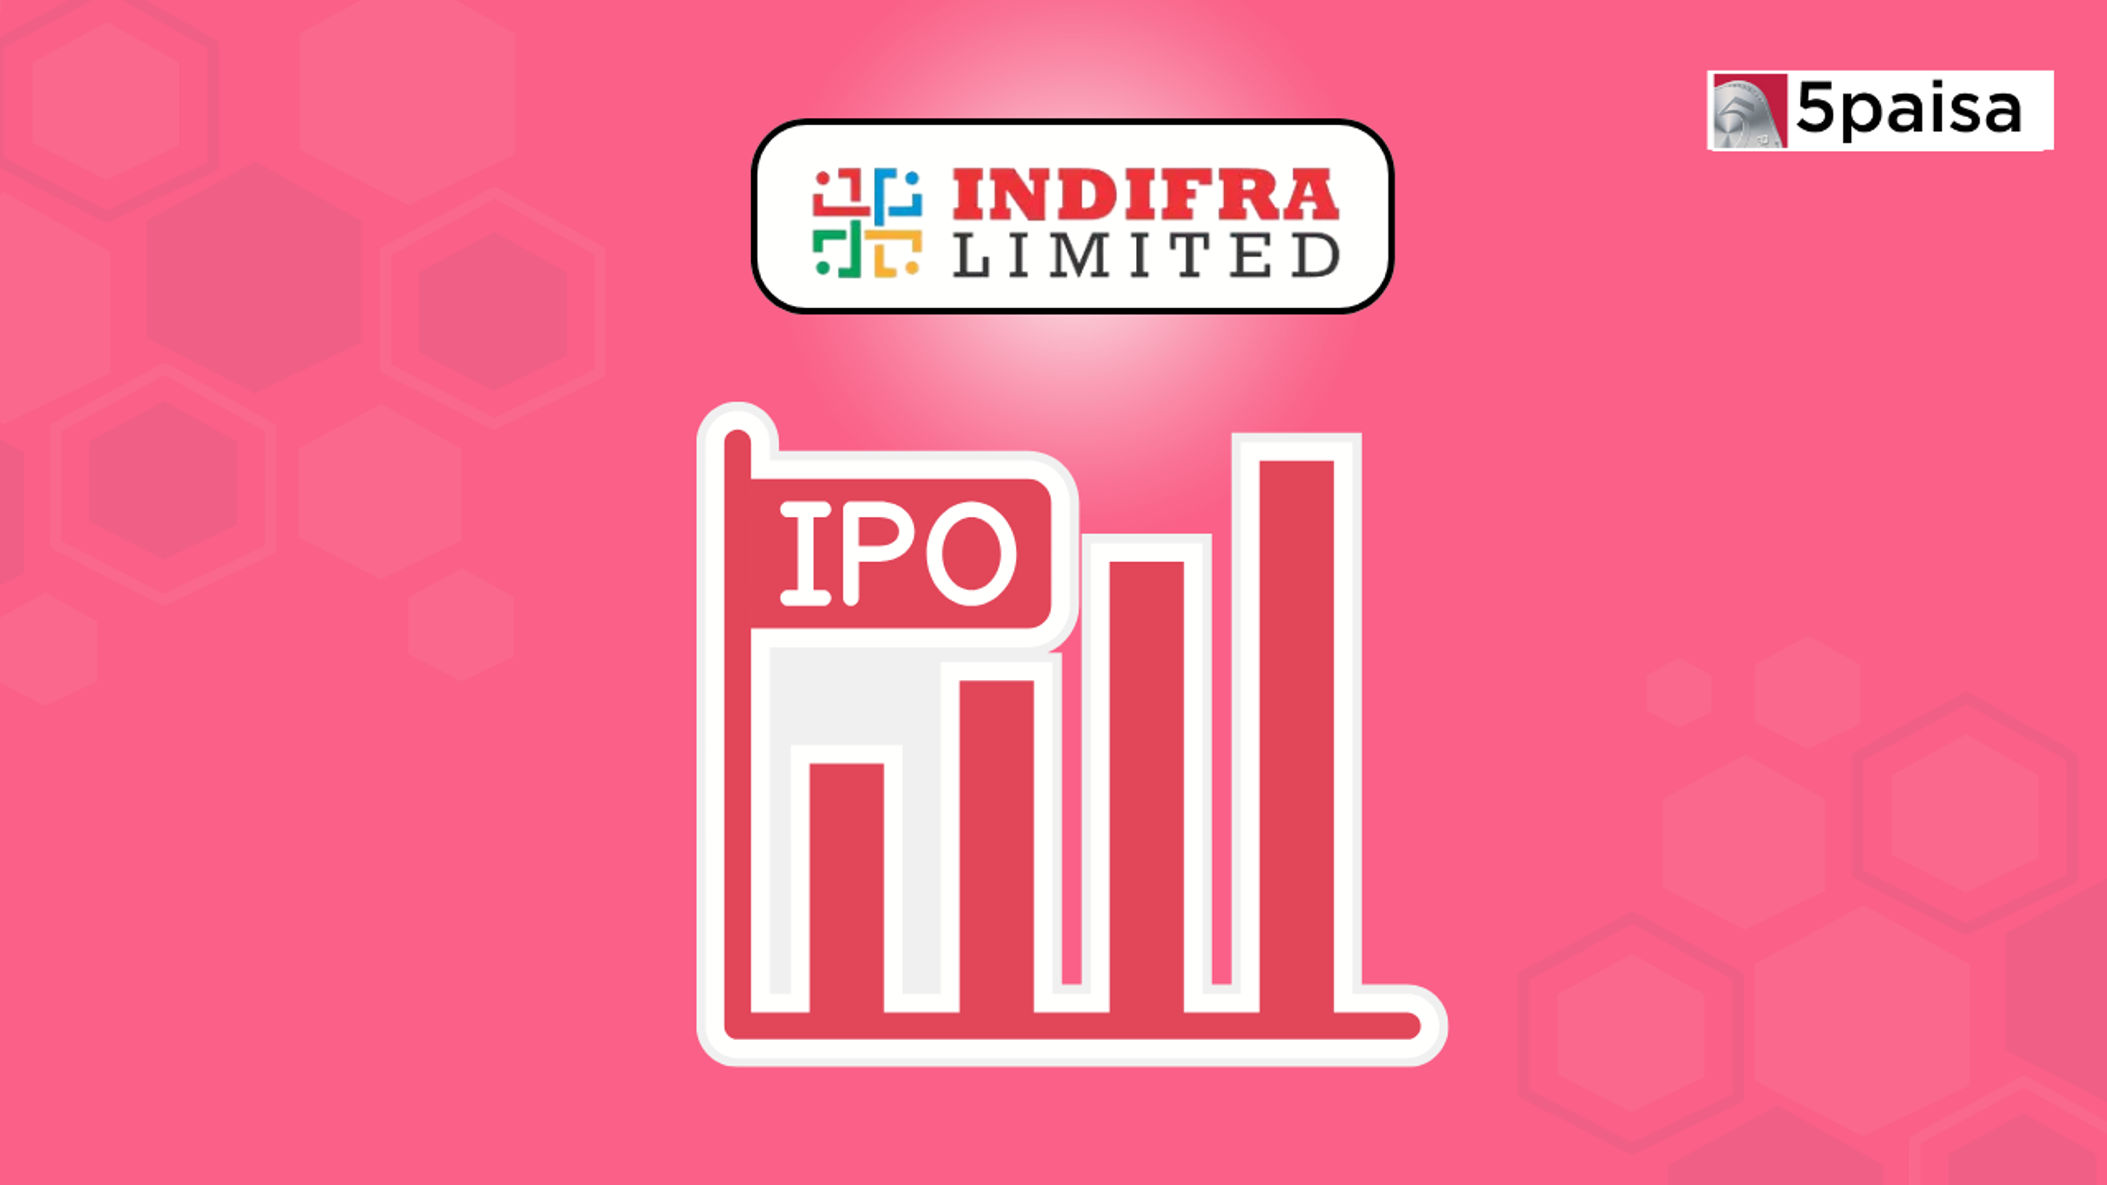 Indifra IPO Financial Analysis